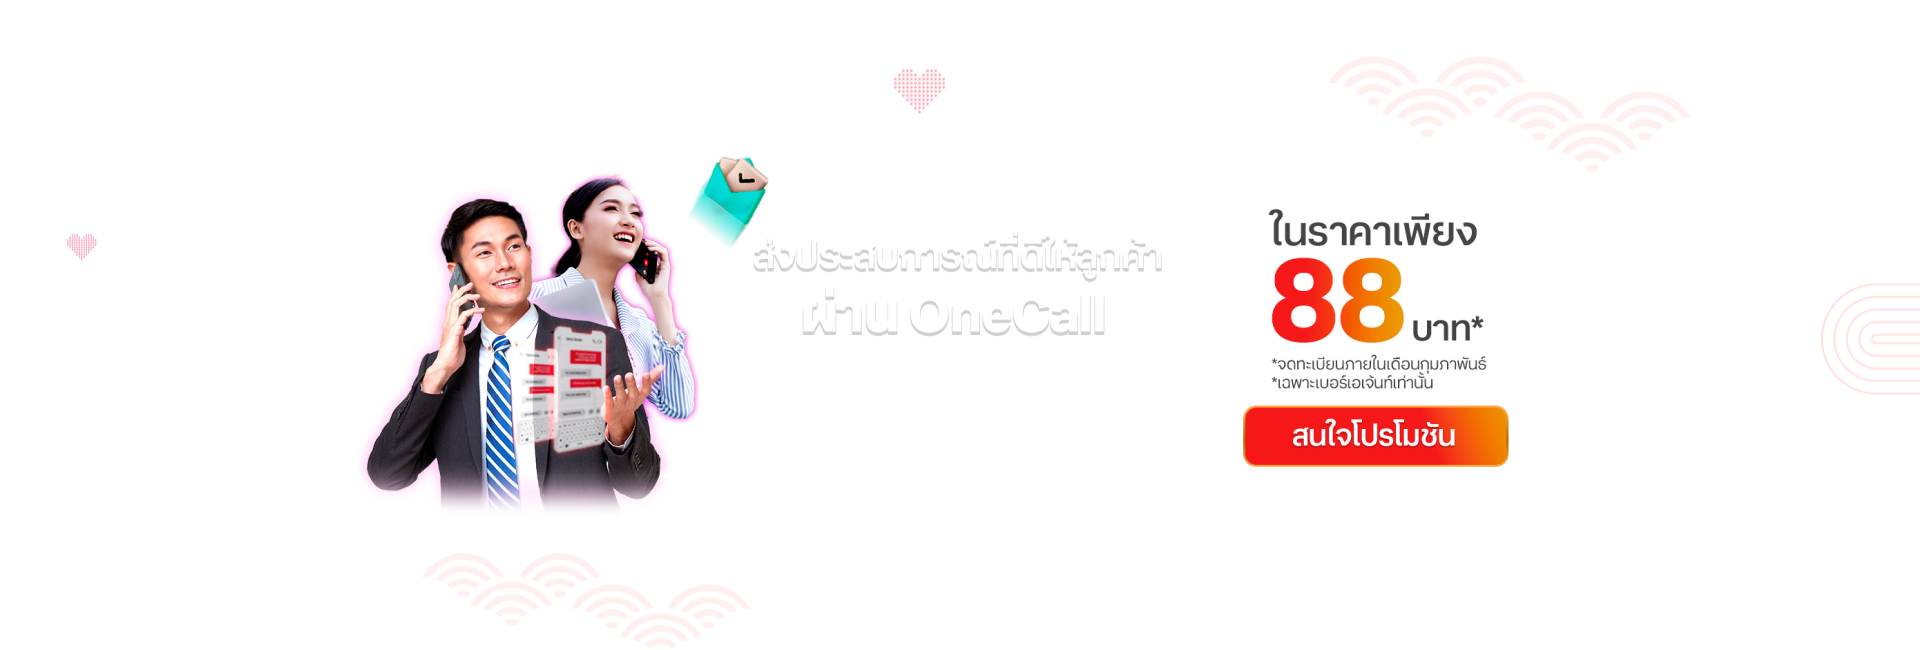 OneCall-MPBX-chinese-new-year